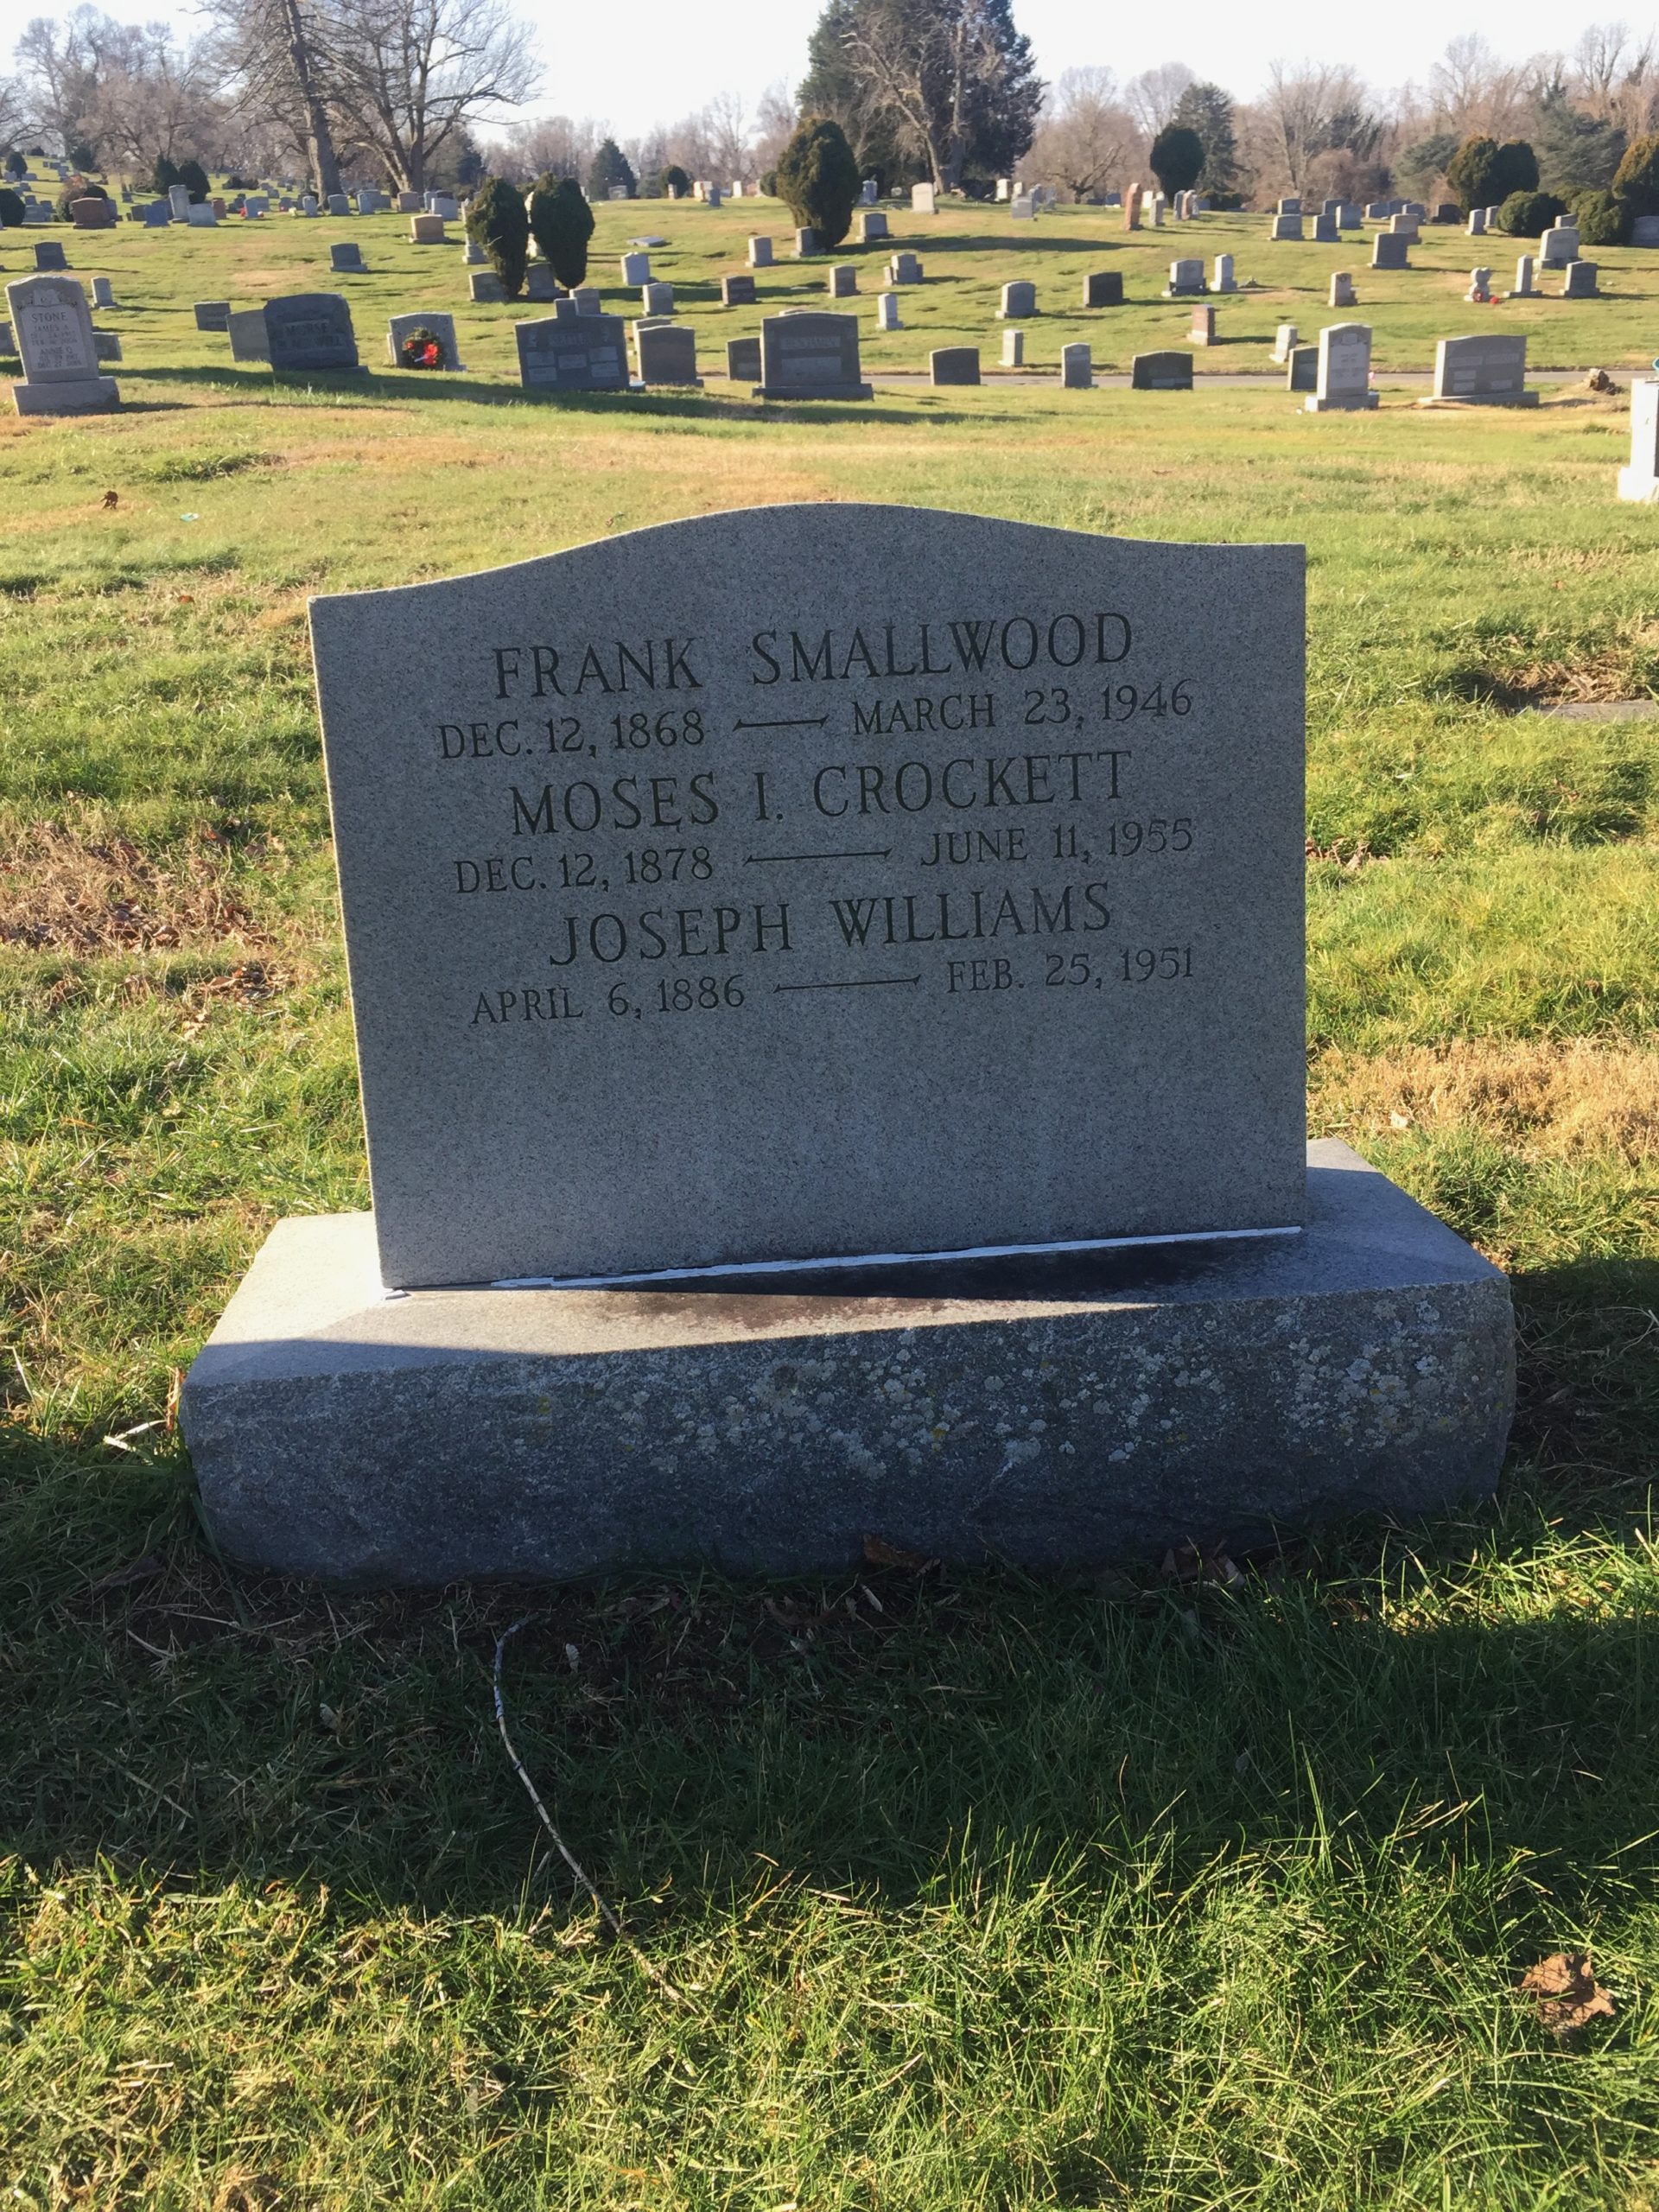 Erik Visits an American Grave, Part 1,065 - Lawyers, Guns & Money